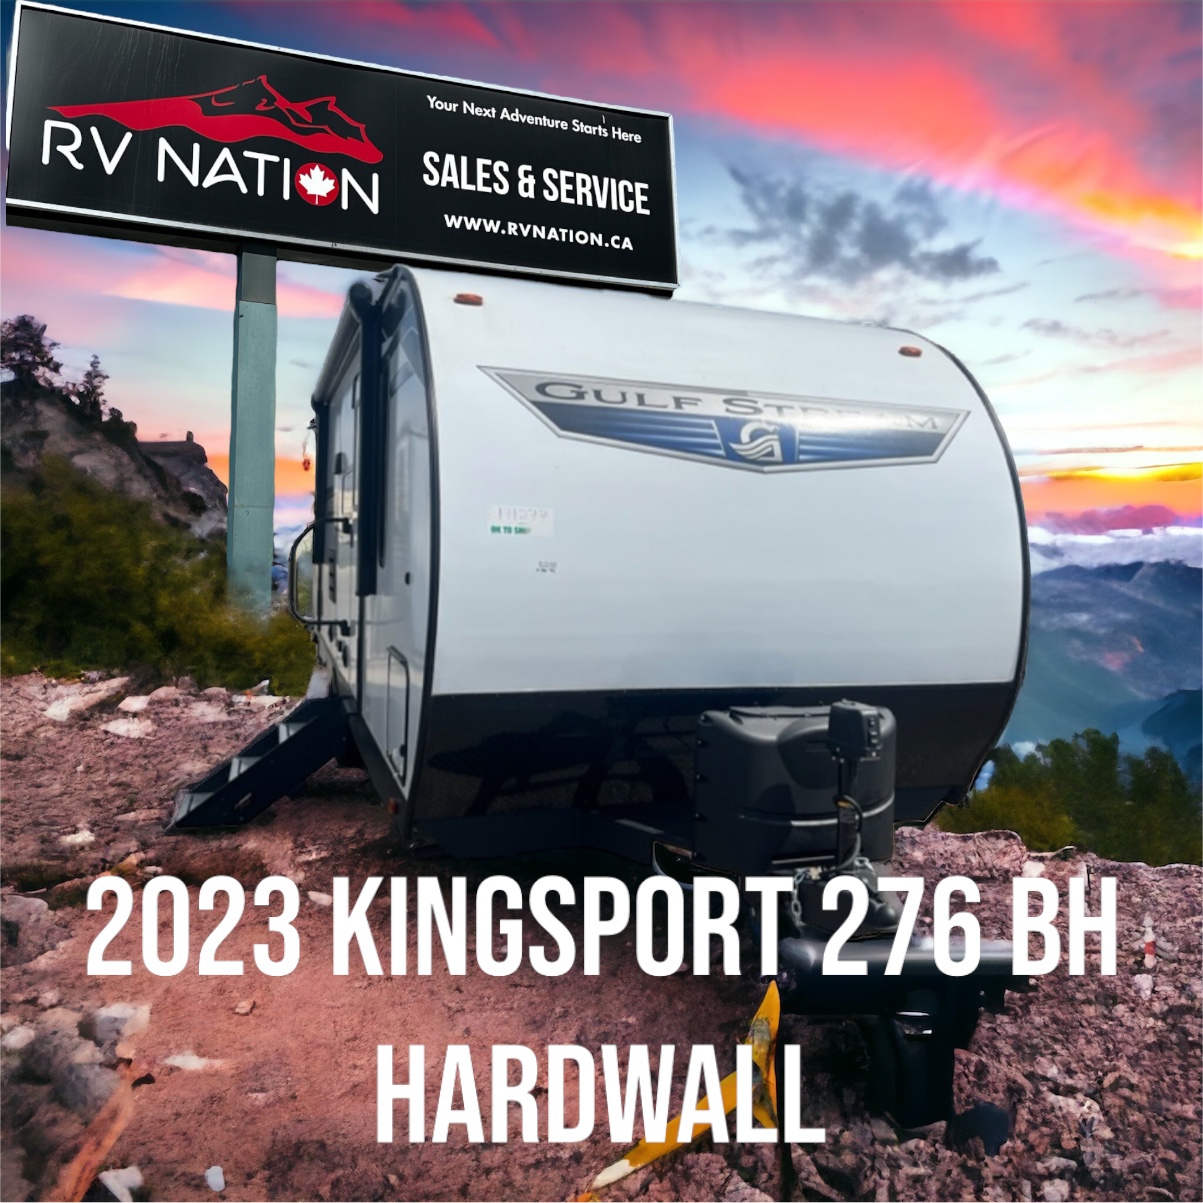 2023 KINGSPORT 276 BH HARDWALL